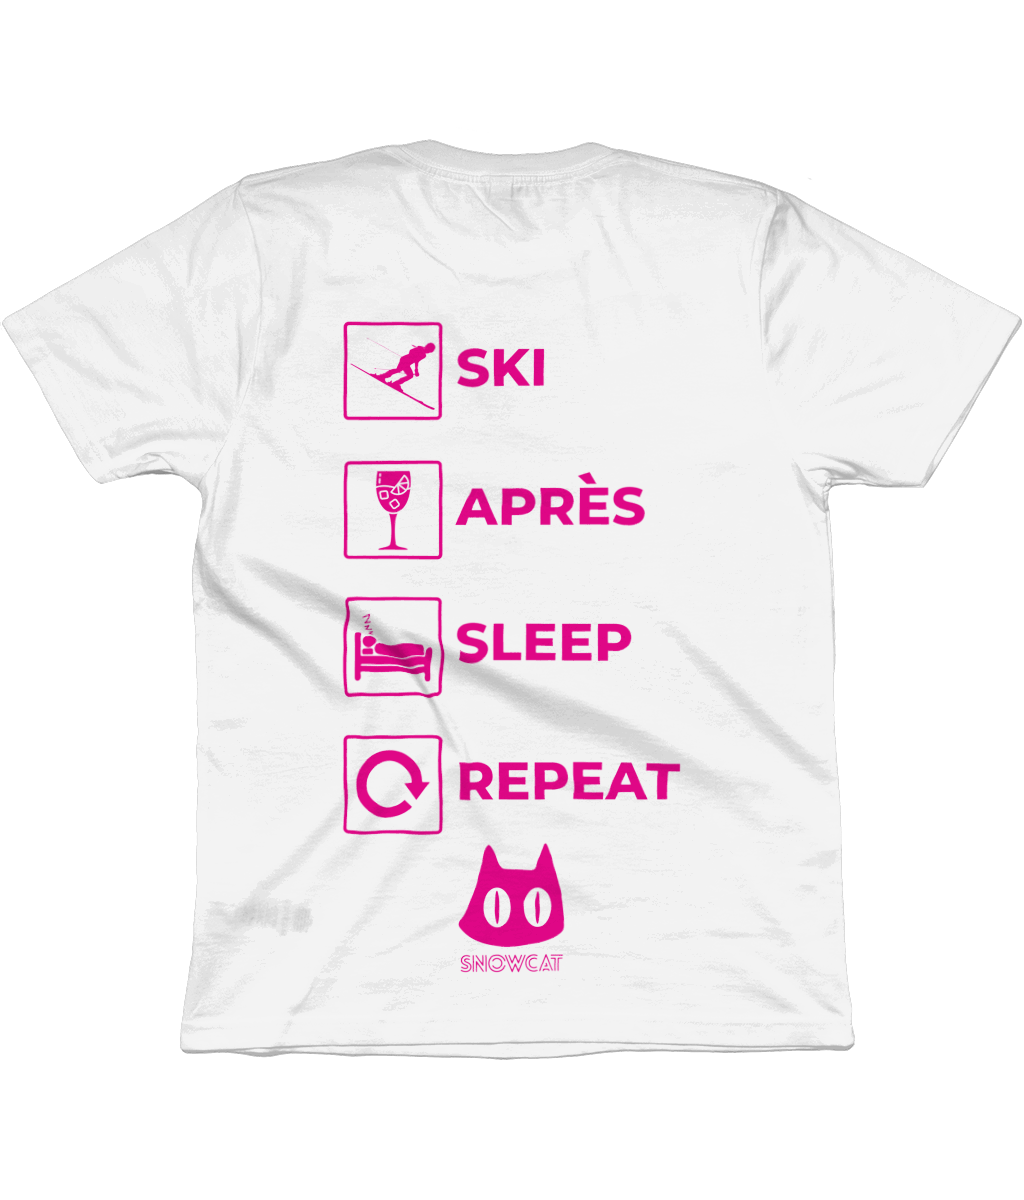 SNOWCAT Ski Après Sleep Repeat Organic Cotton T-Shirt Unisex